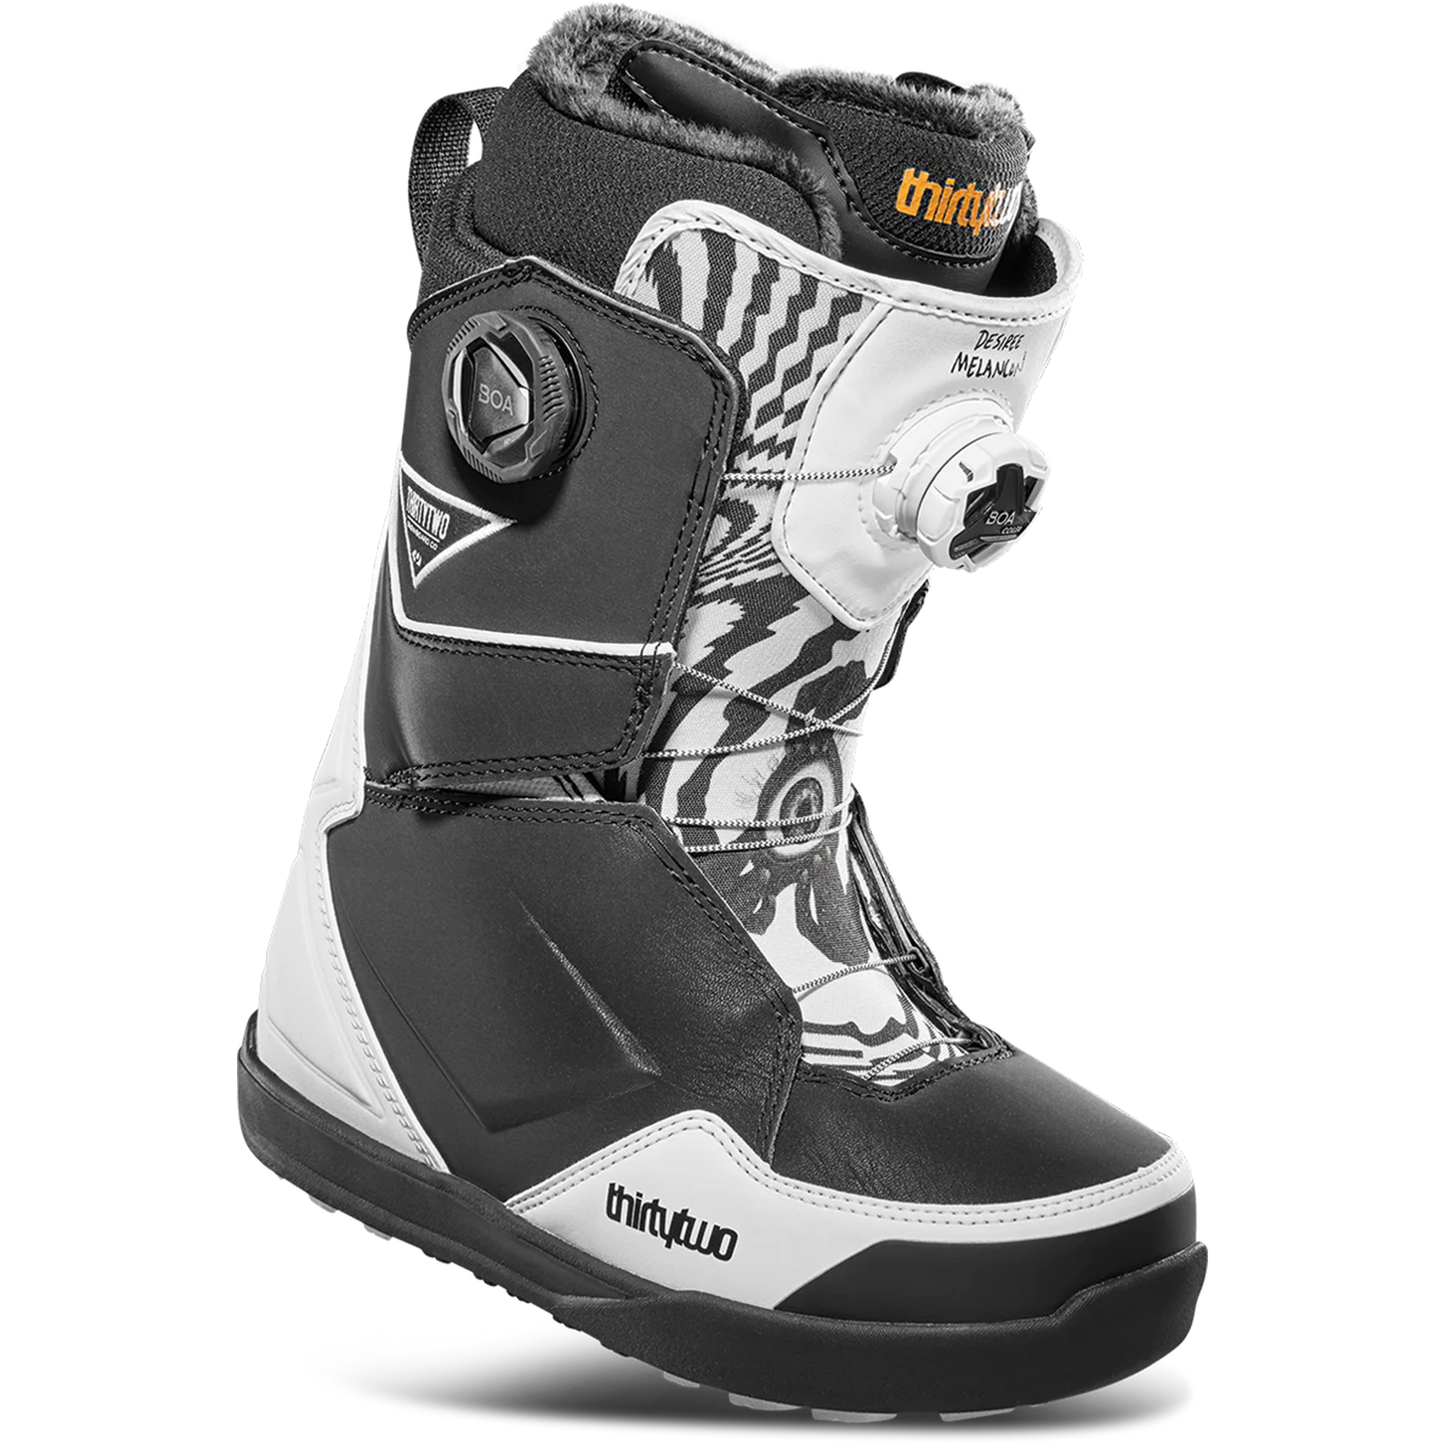 ThirtyTwo Women's Lashed Melancon Double BOA Snowboard Boots - OpenBox Black White Snowboard Boots